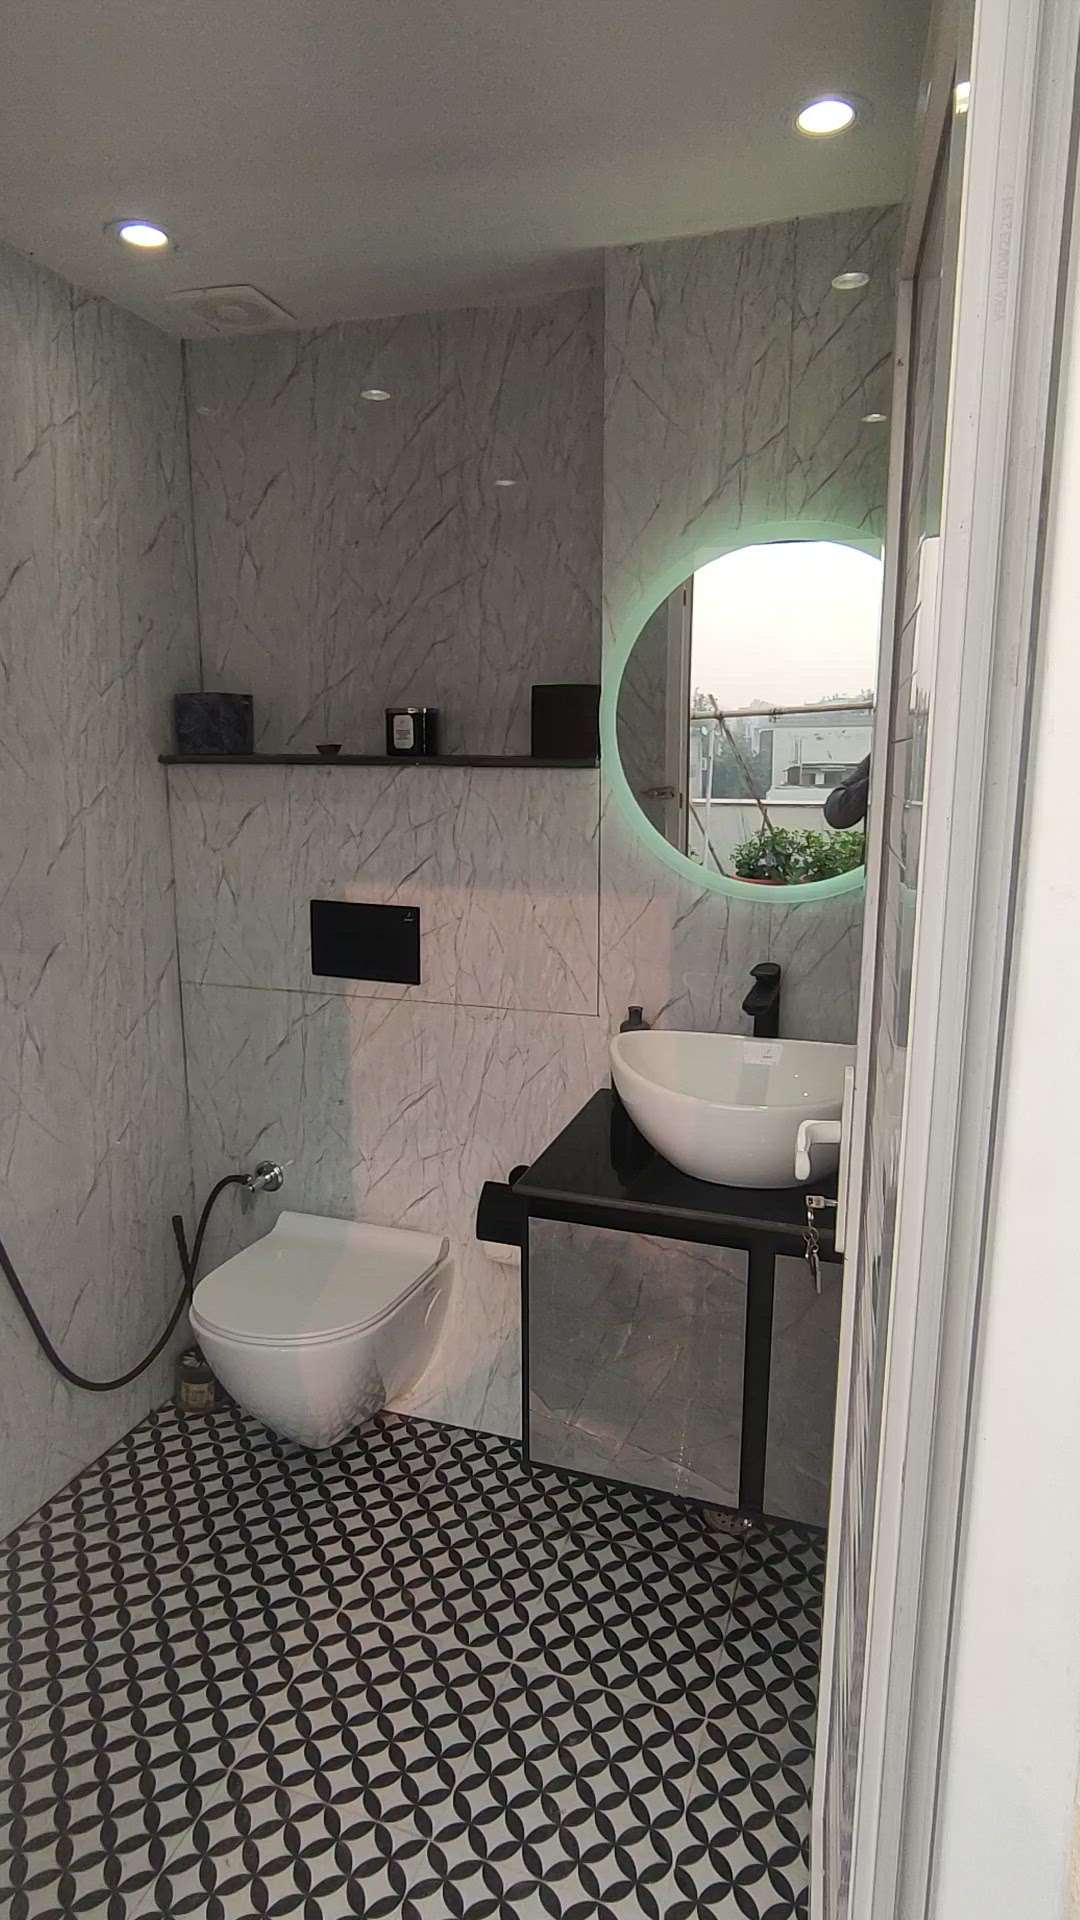 #BathroomDesigns #BathroomTIles #BathroomRenovation #bathroomfaucets  #InteriorDesigner #Architect #Architectural&nterior  #LUXURY_INTERIOR #interiorpainting #bathroomdecor